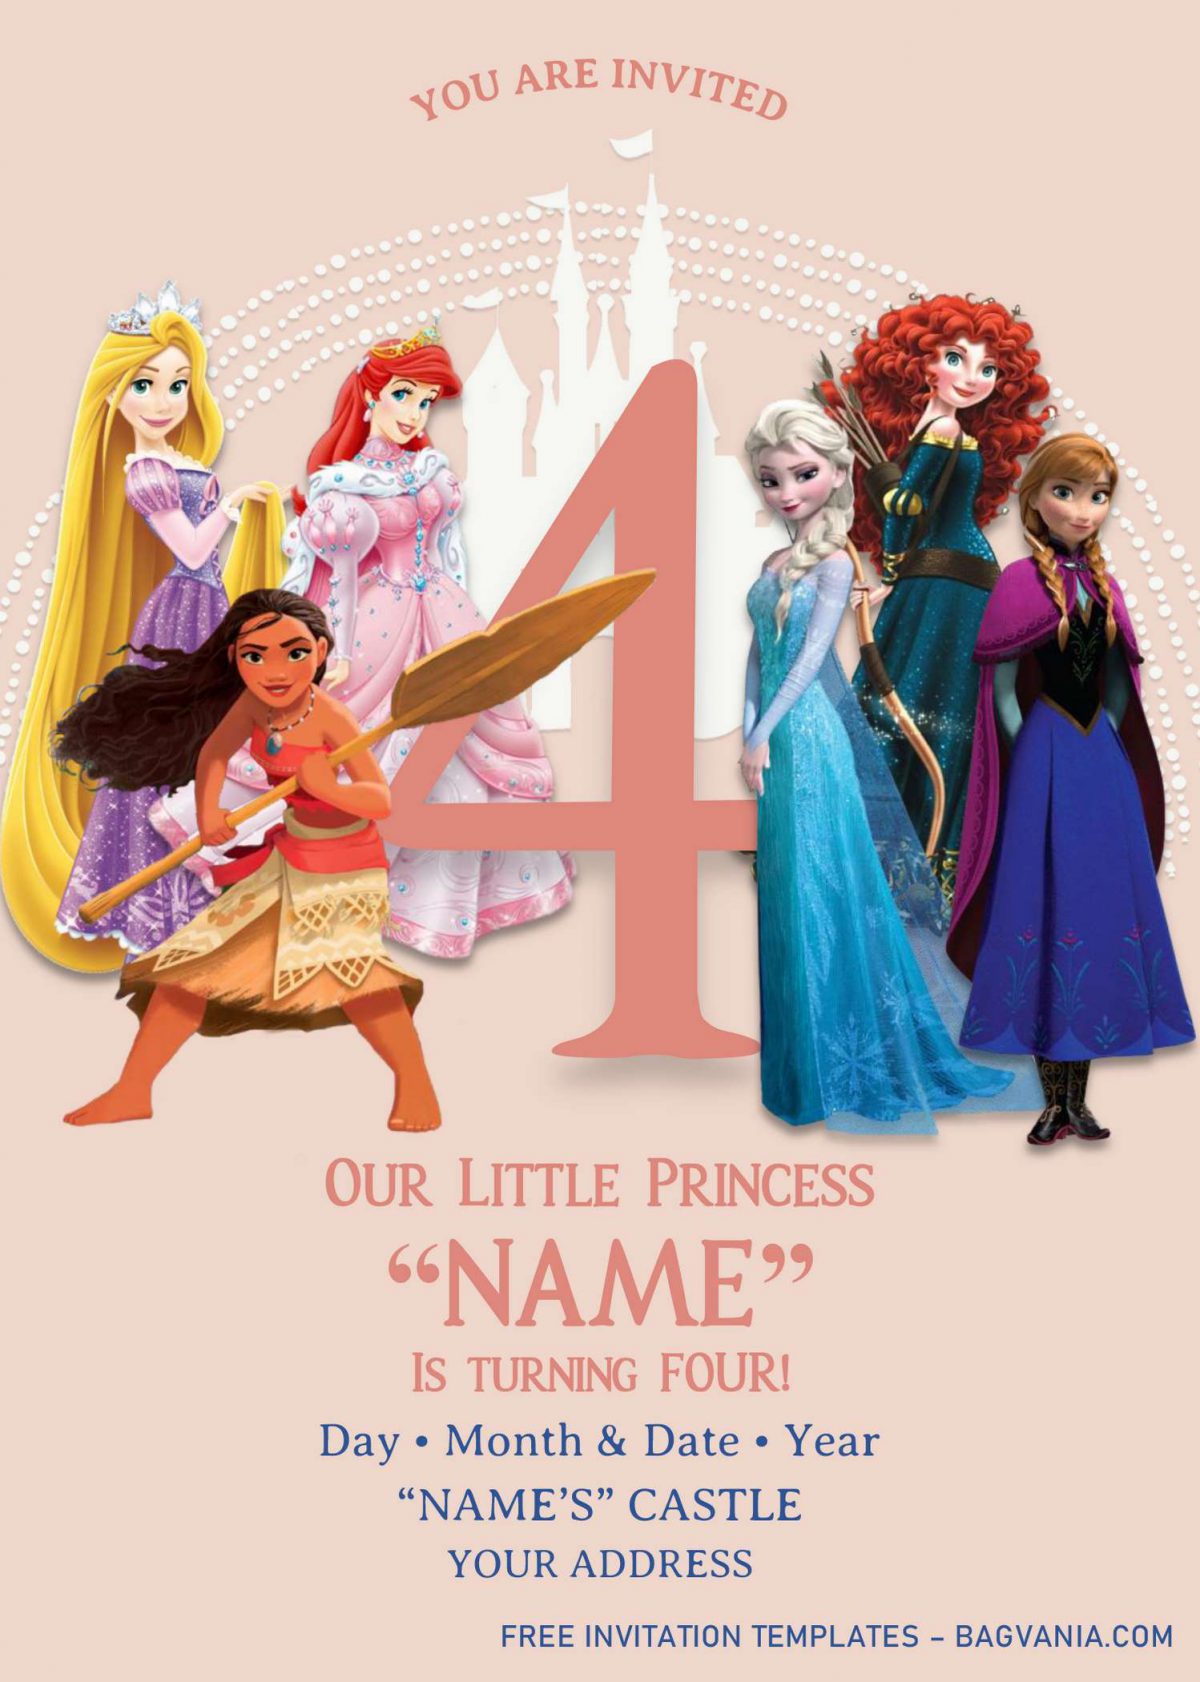 Disney Princess Birthday Invitation Templates - Editable With MS Word and has moana and merida brave